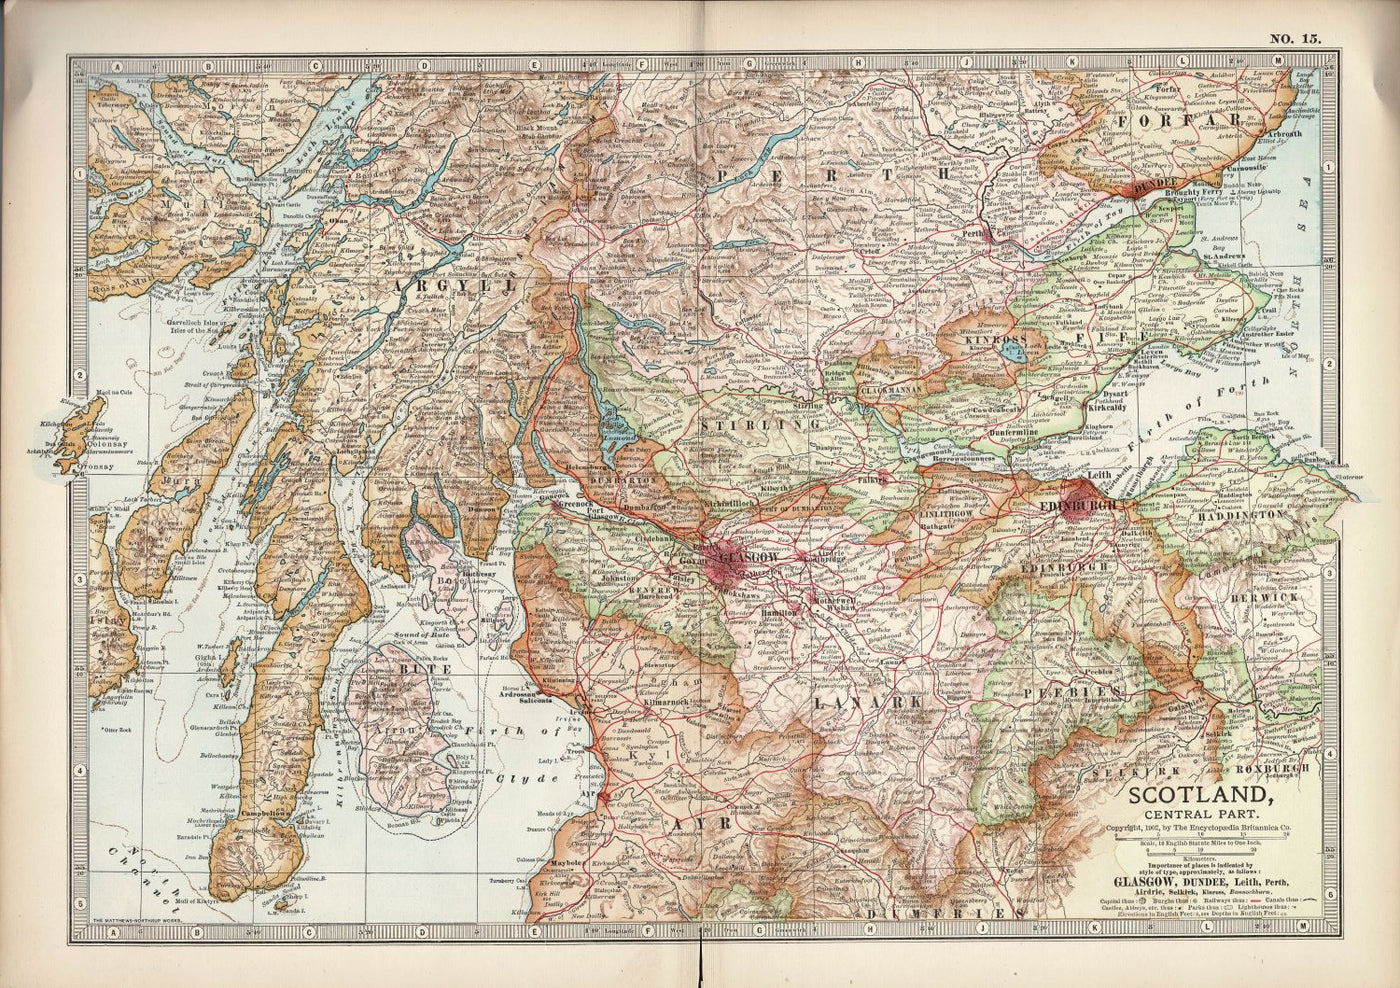 Scotland Central Part antique map Encyclopedia Britannica 1903